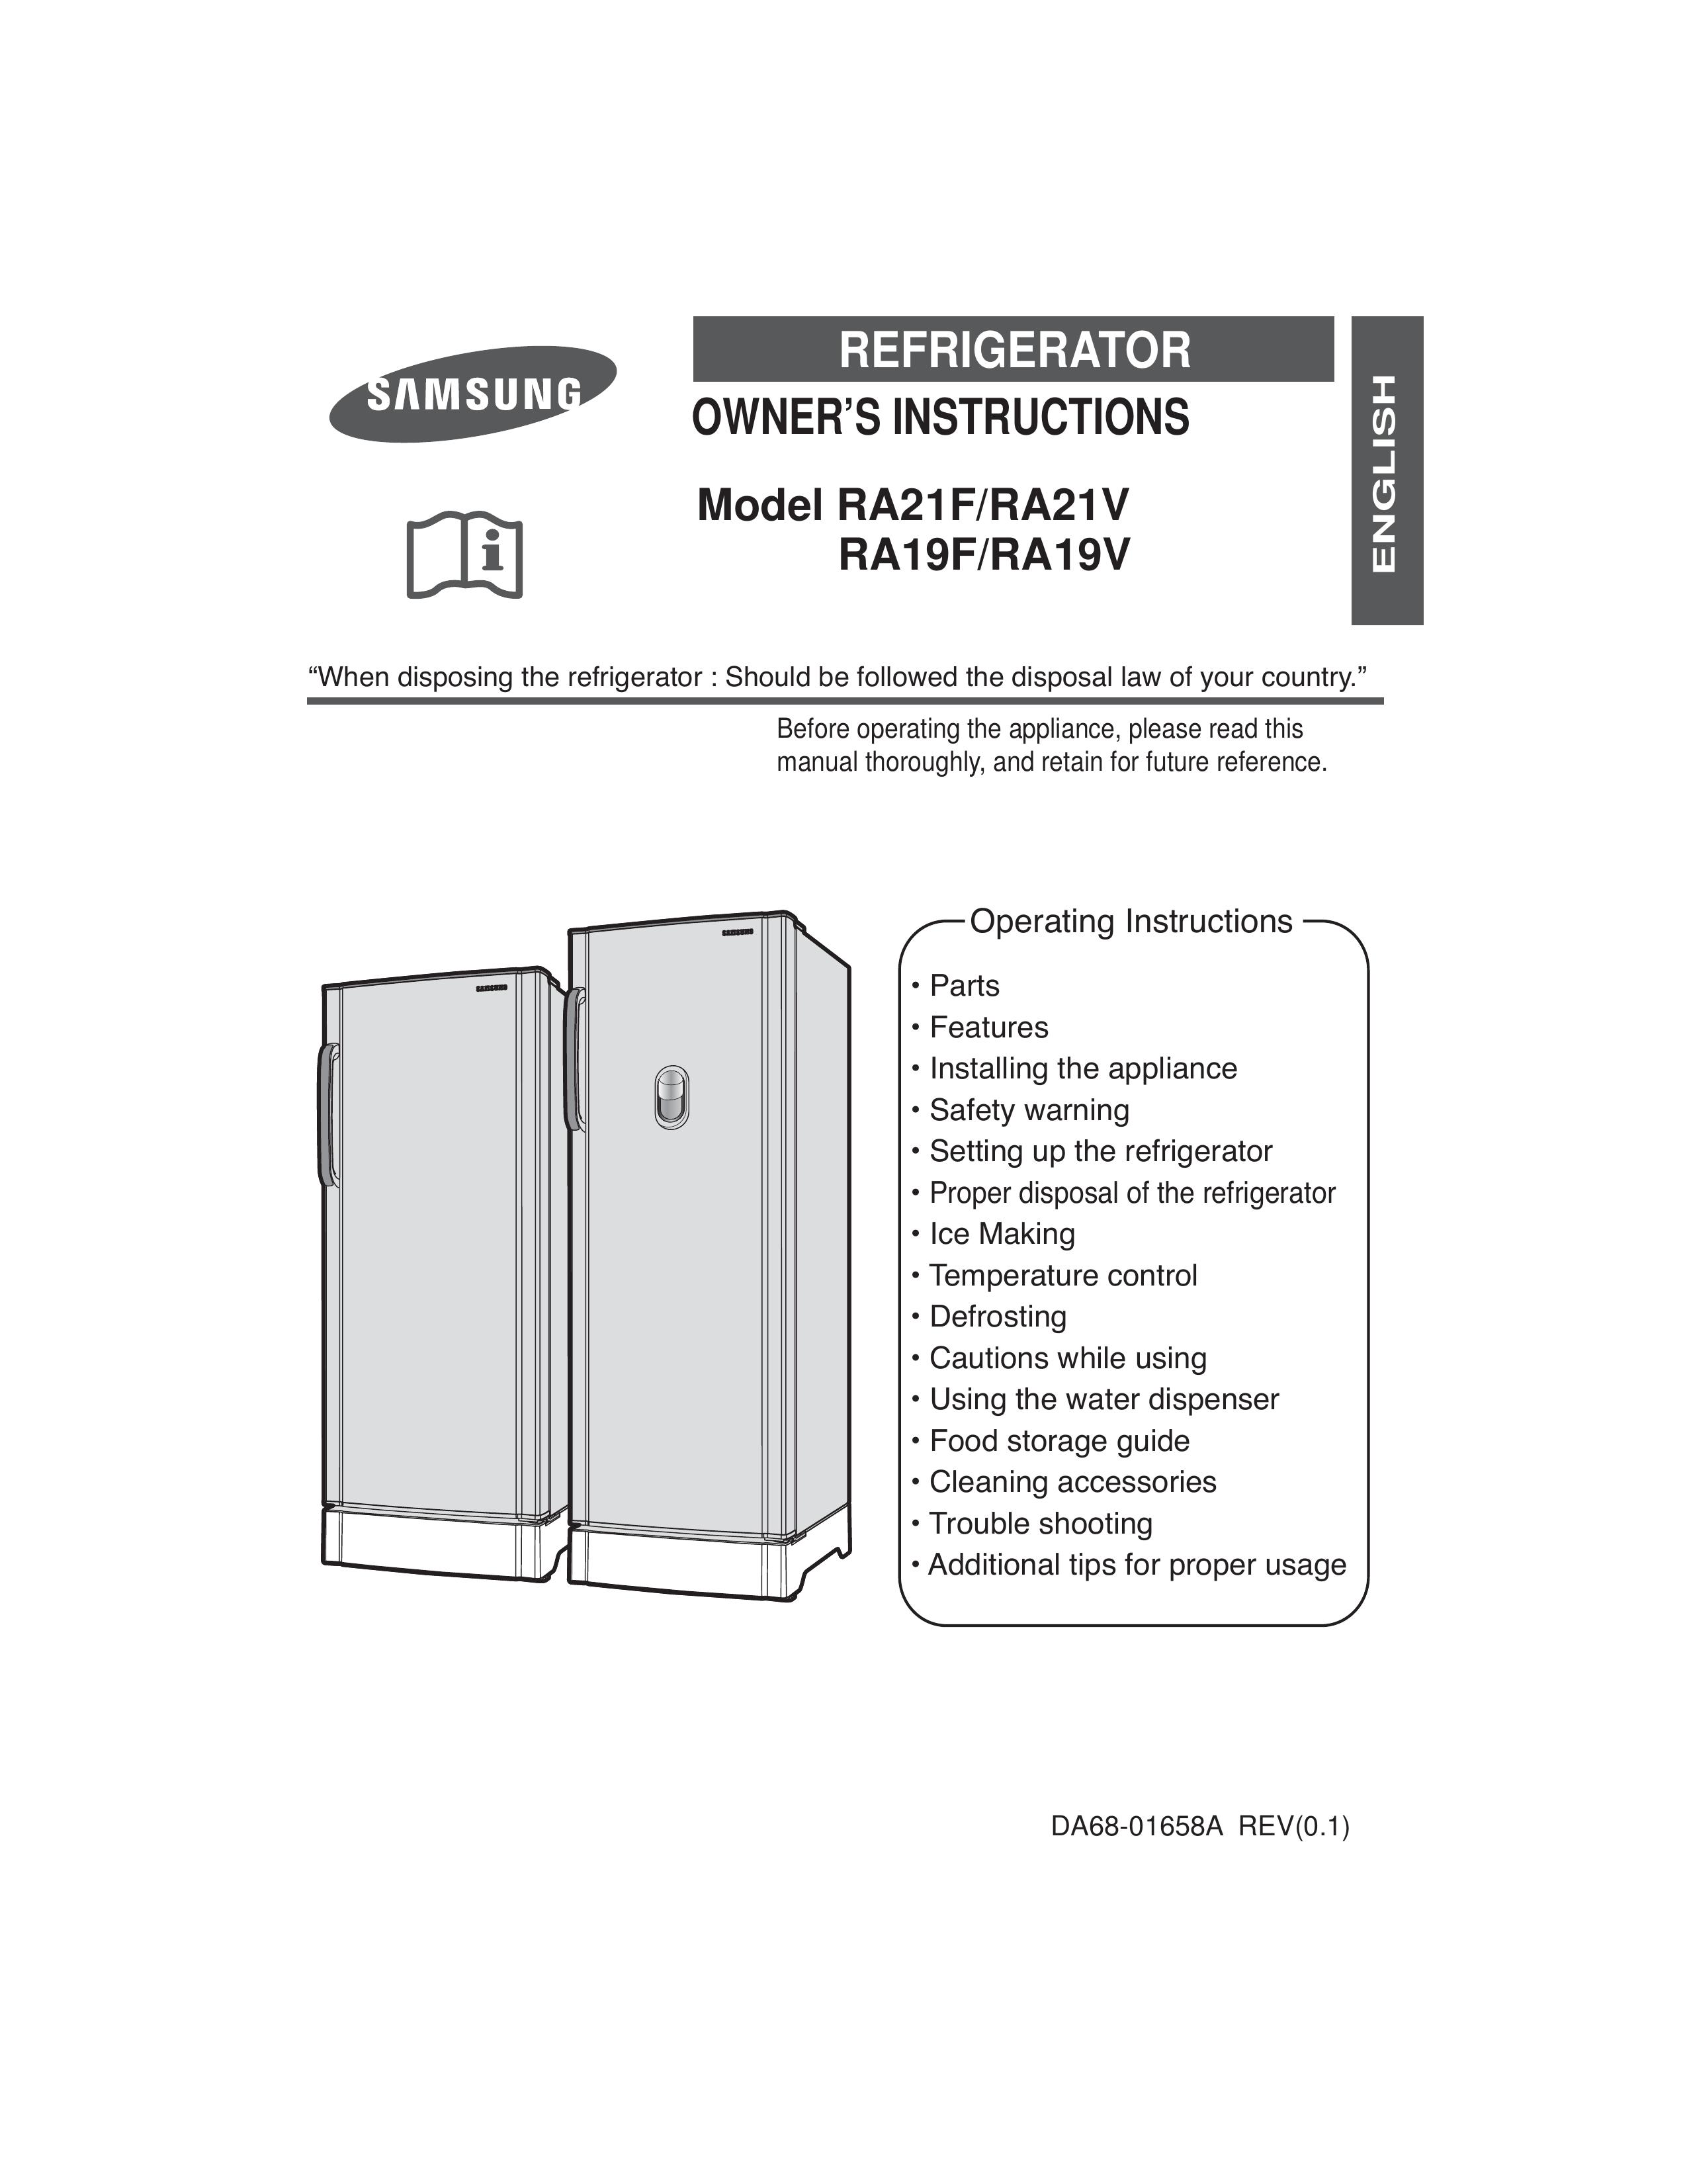 Samsung RA19F/RA19V Refrigerator User Manual